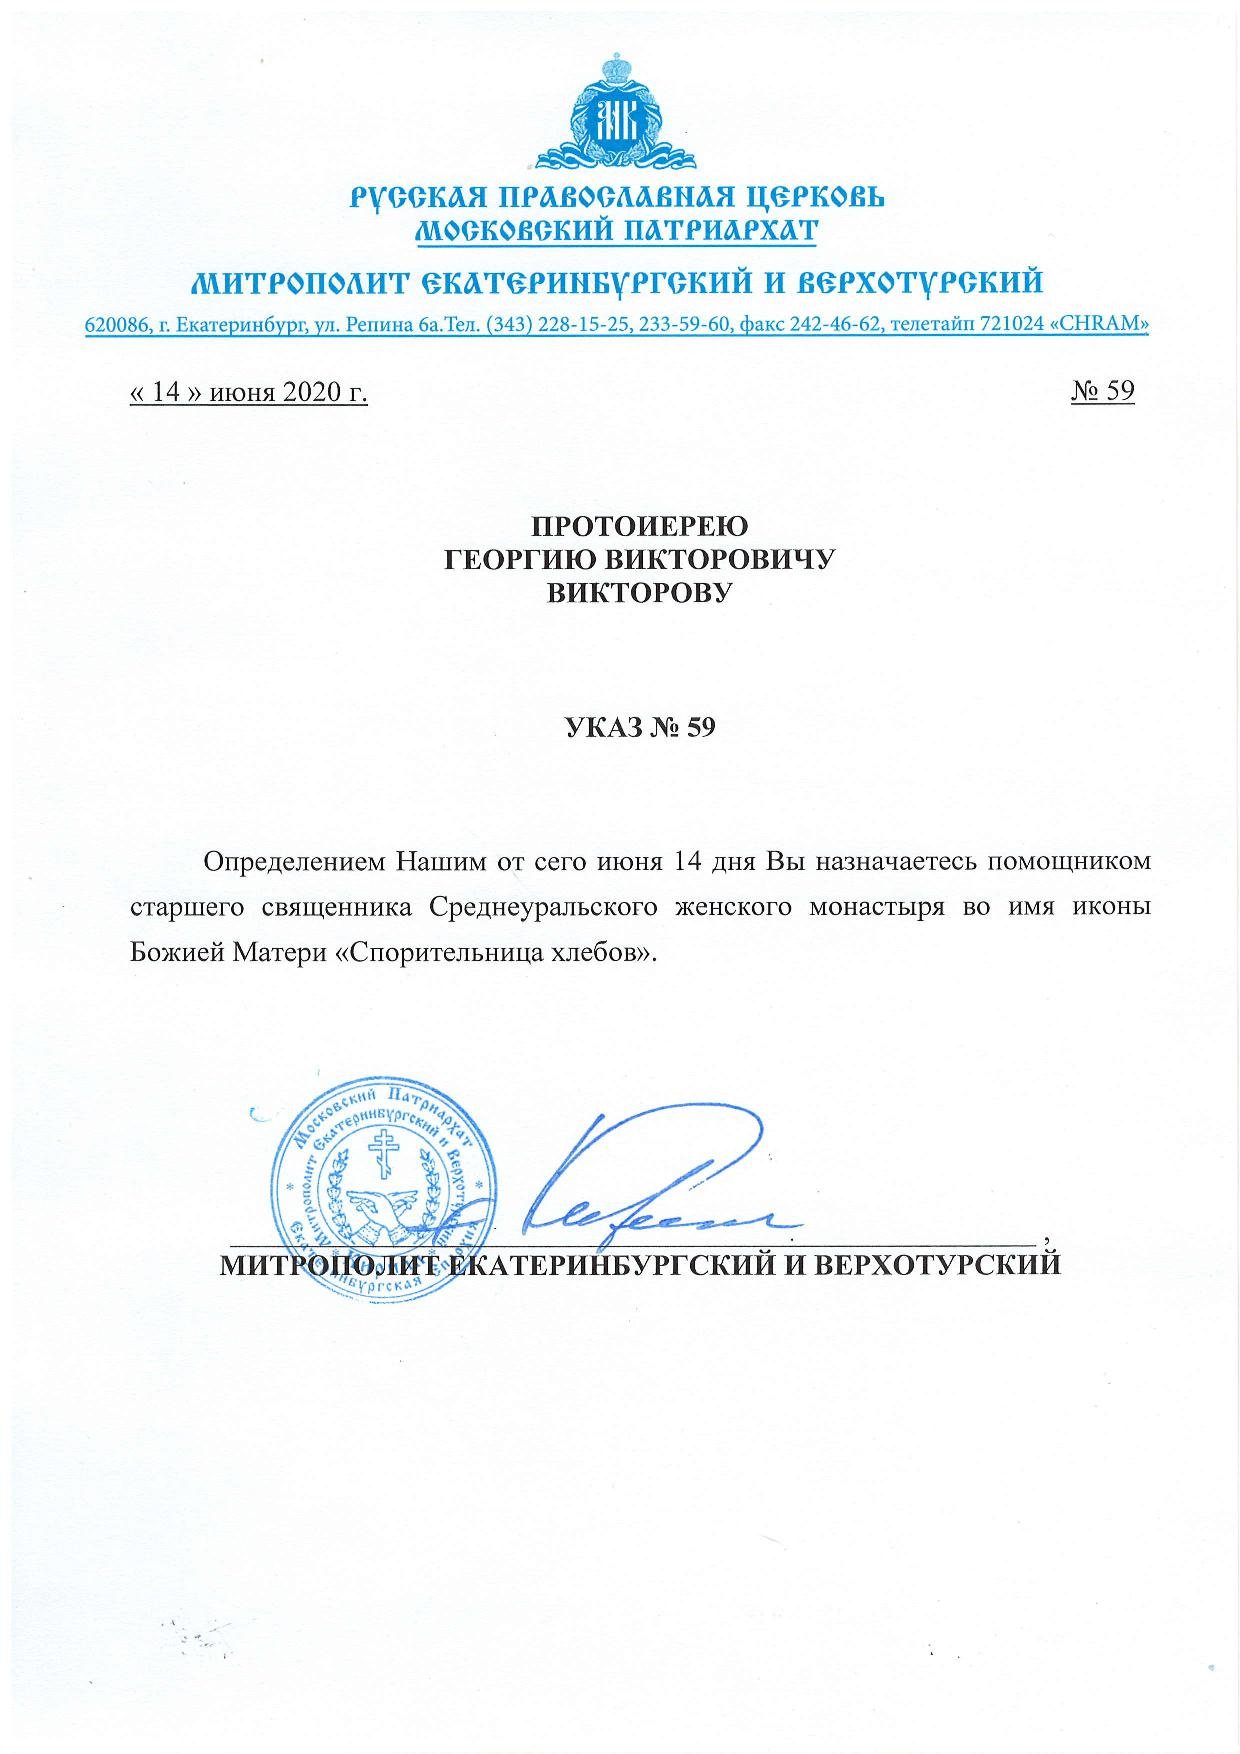 Документ подписал митрополит Кирилл